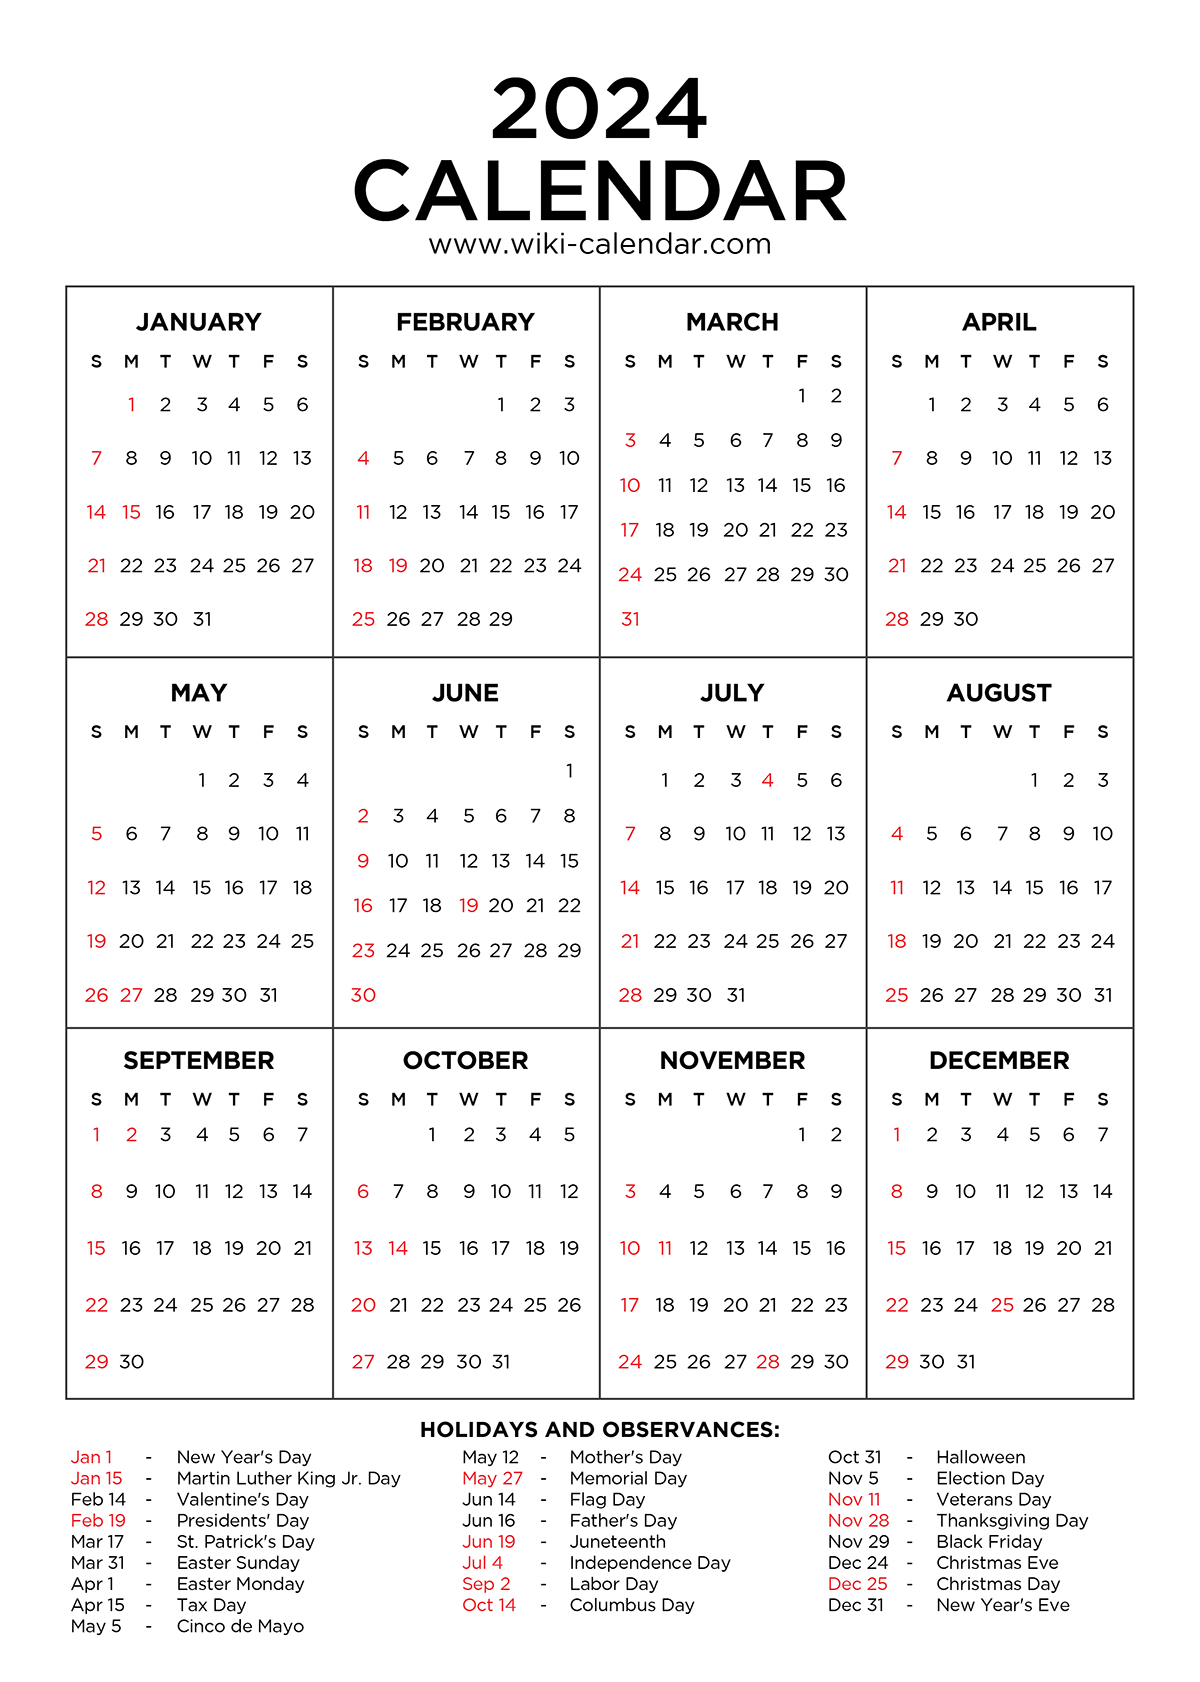 Year 2024 Calendar Printable With Holidays - Wiki Calendar | Printable Calendar For 2024 With Holidays Free Download